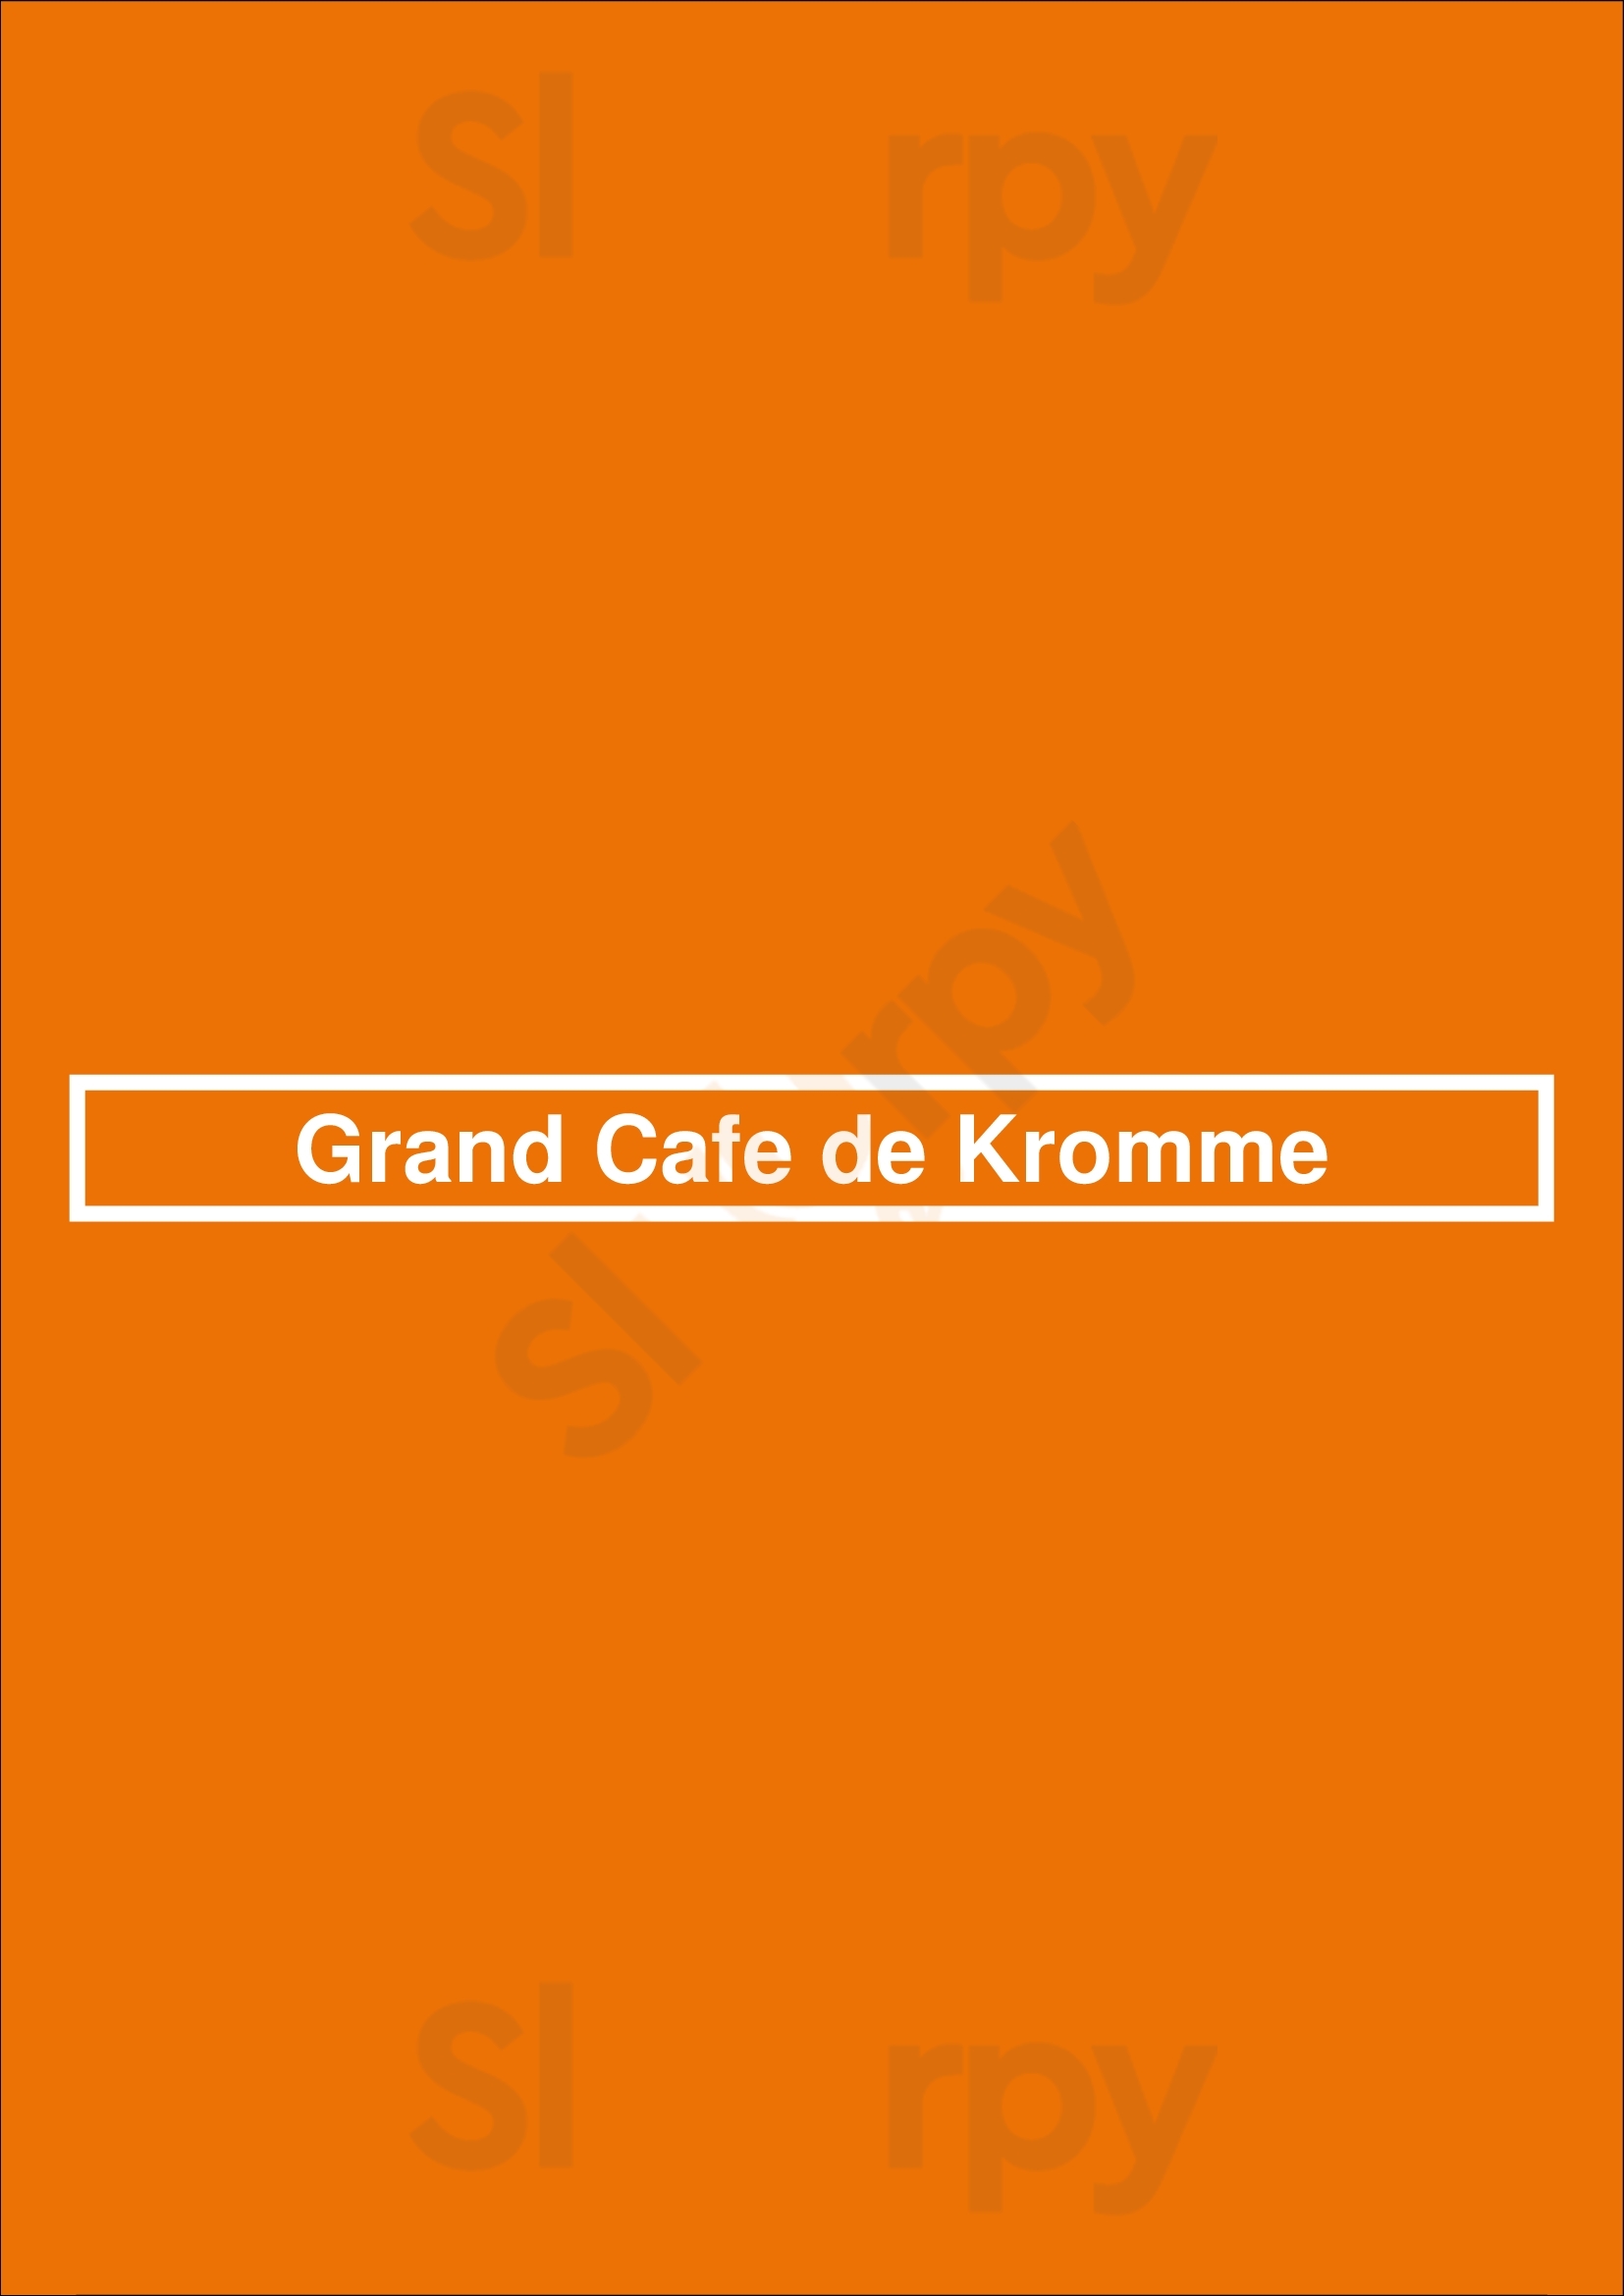 Grand Cafe De Kromme Amersfoort Menu - 1